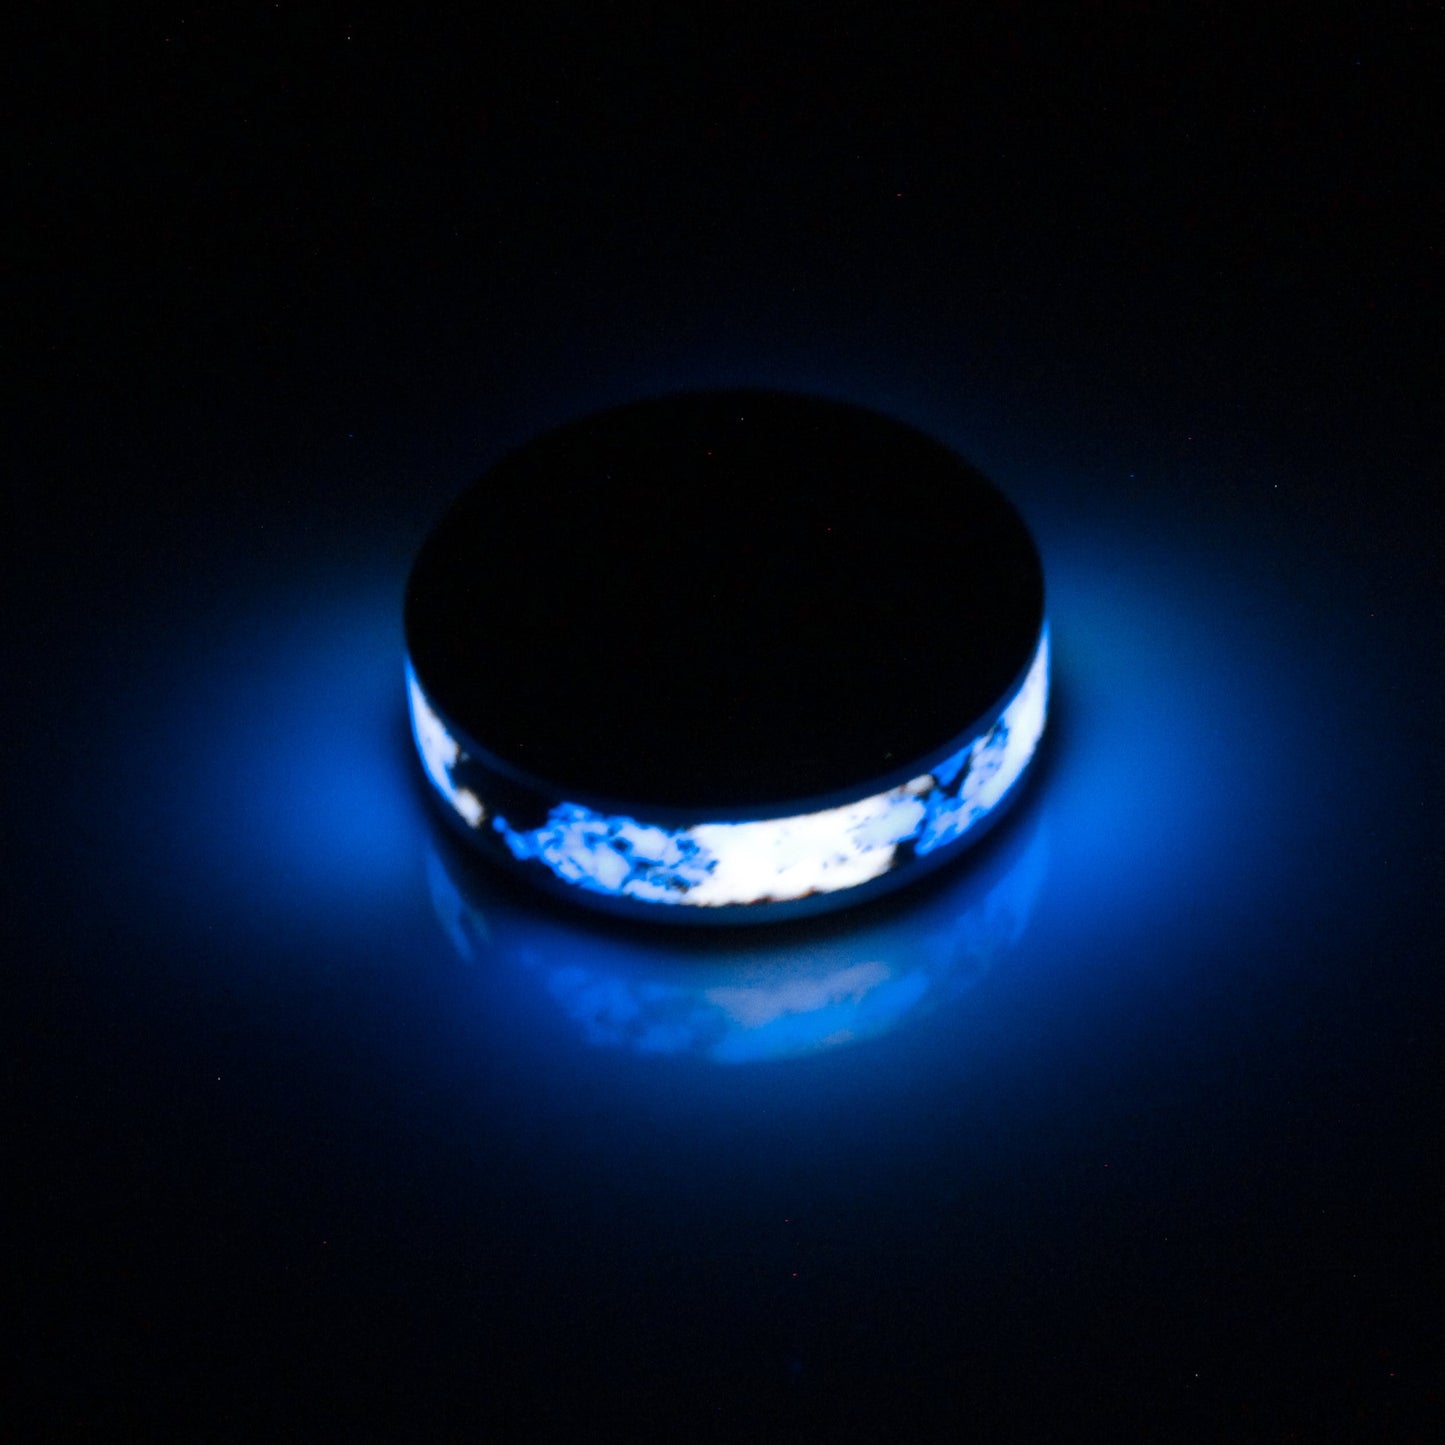 Custom Royal Inlay Ring